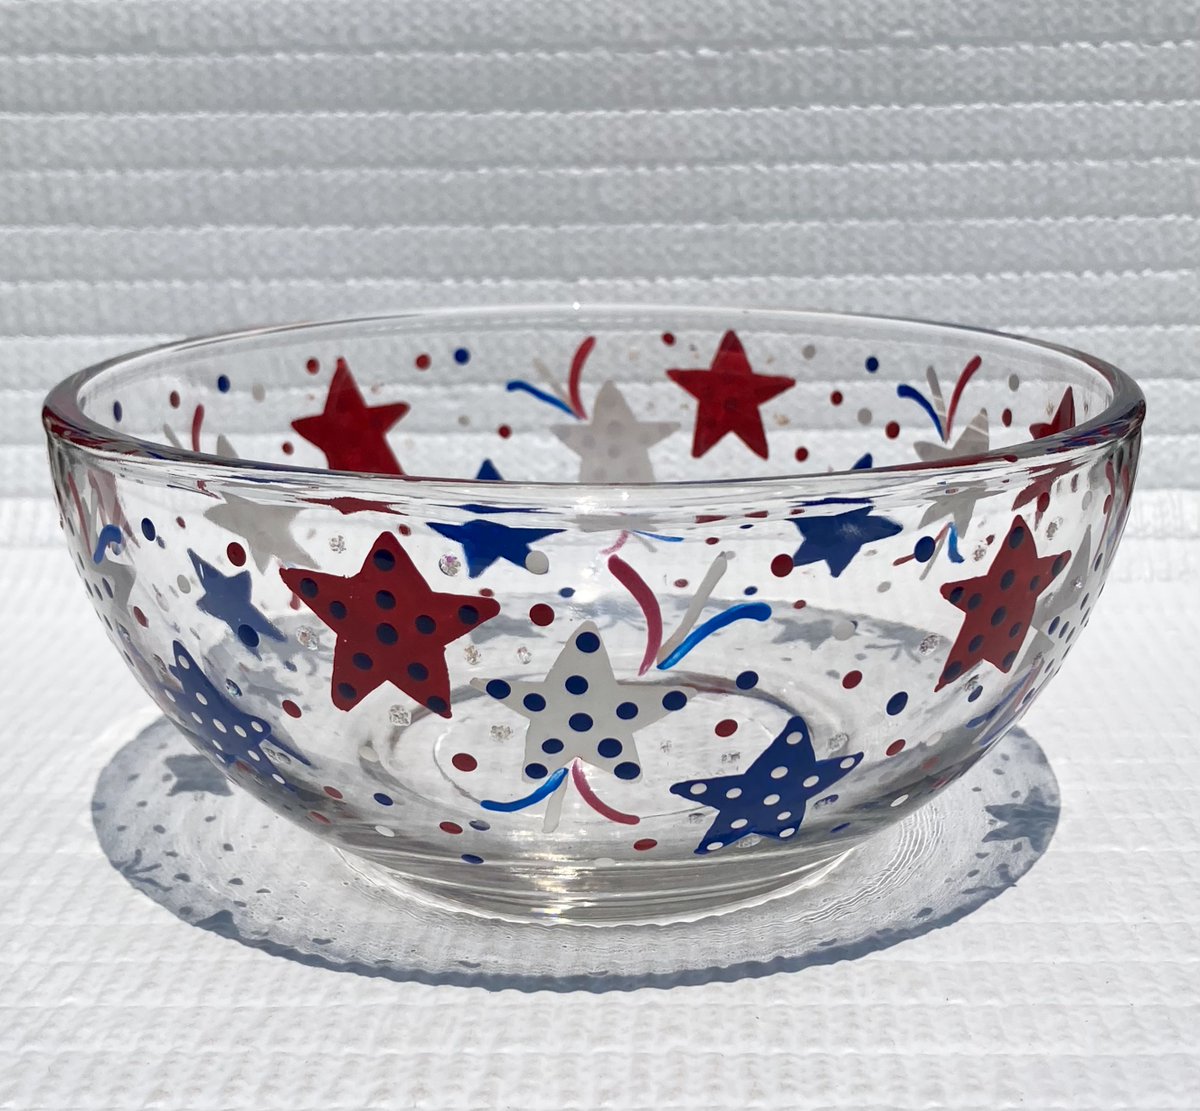 Check out this bowl etsy.com/listing/172307… #4thofjuly #candydish #summerdecor #SMILEtt23 #etsyshop #CraftBizParty #etsy #patrioticdecor